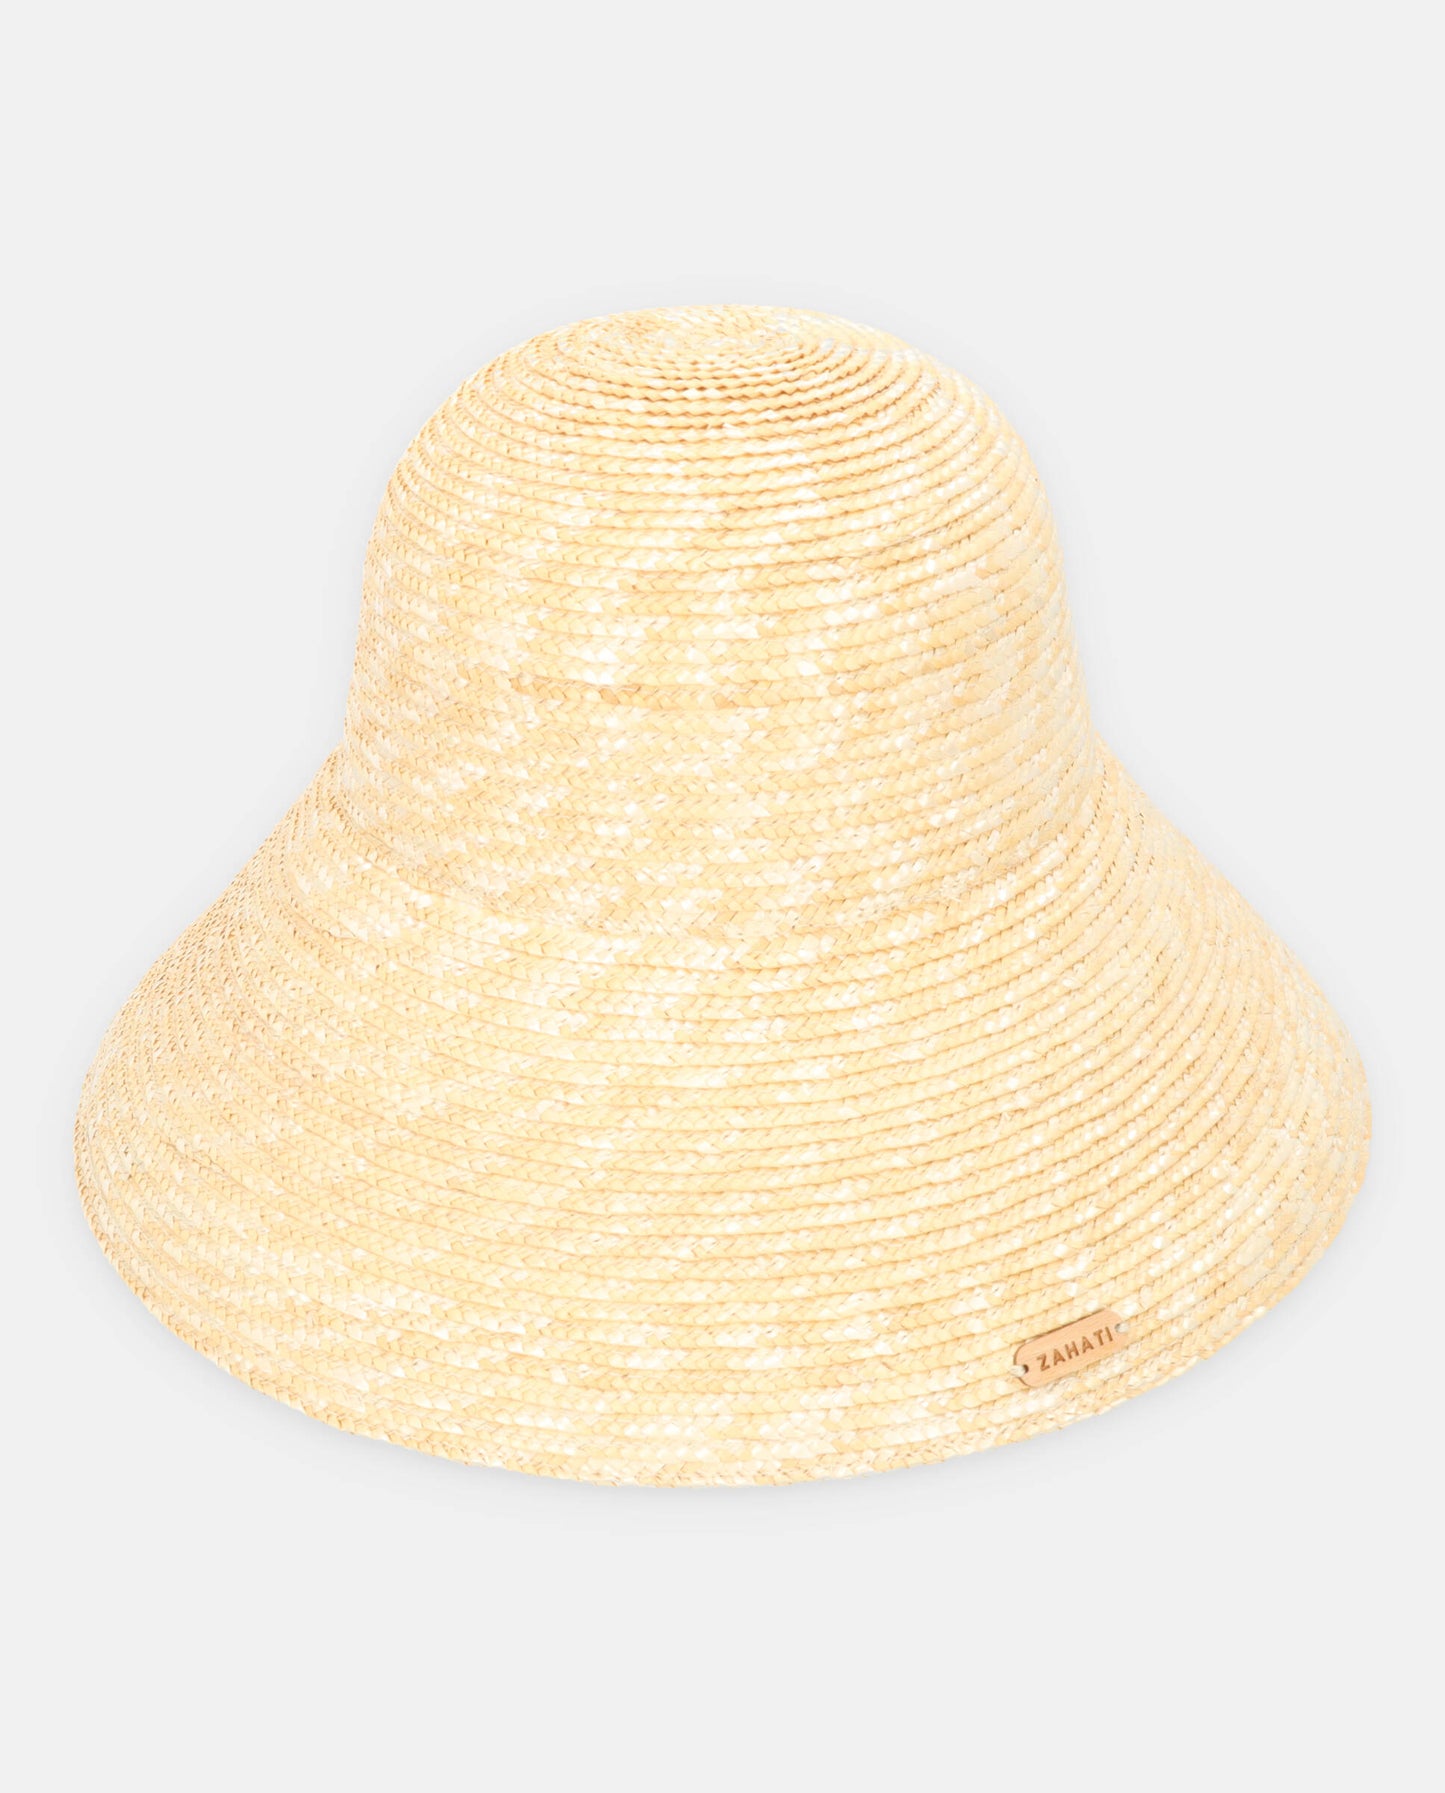 Sombrero Seta Natural